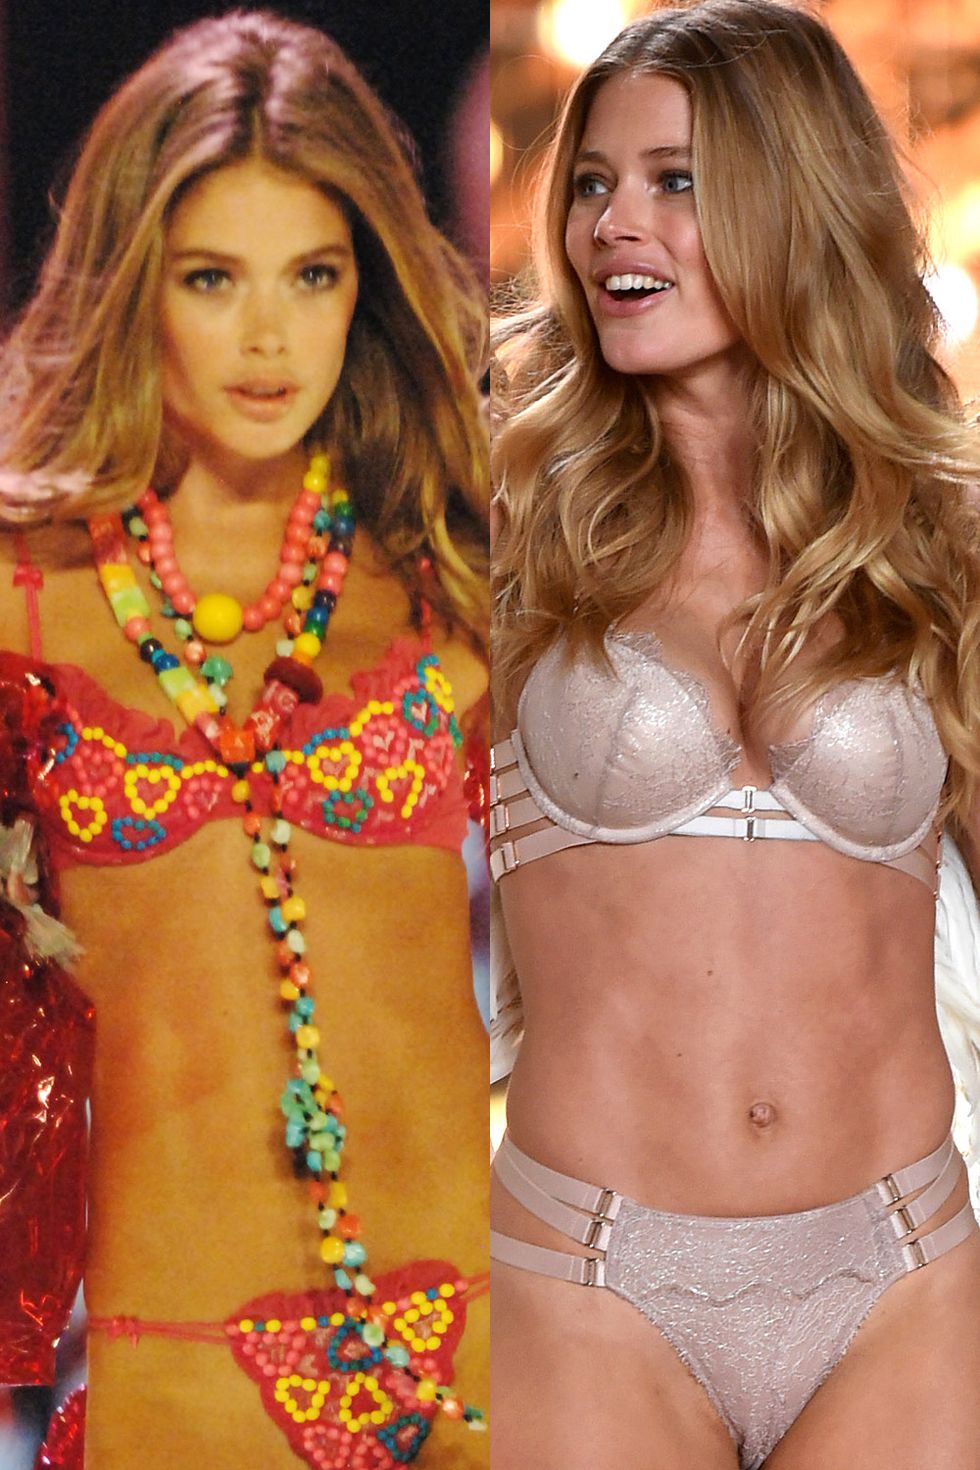 Victoria's Secret Models Photos: Then and Now 